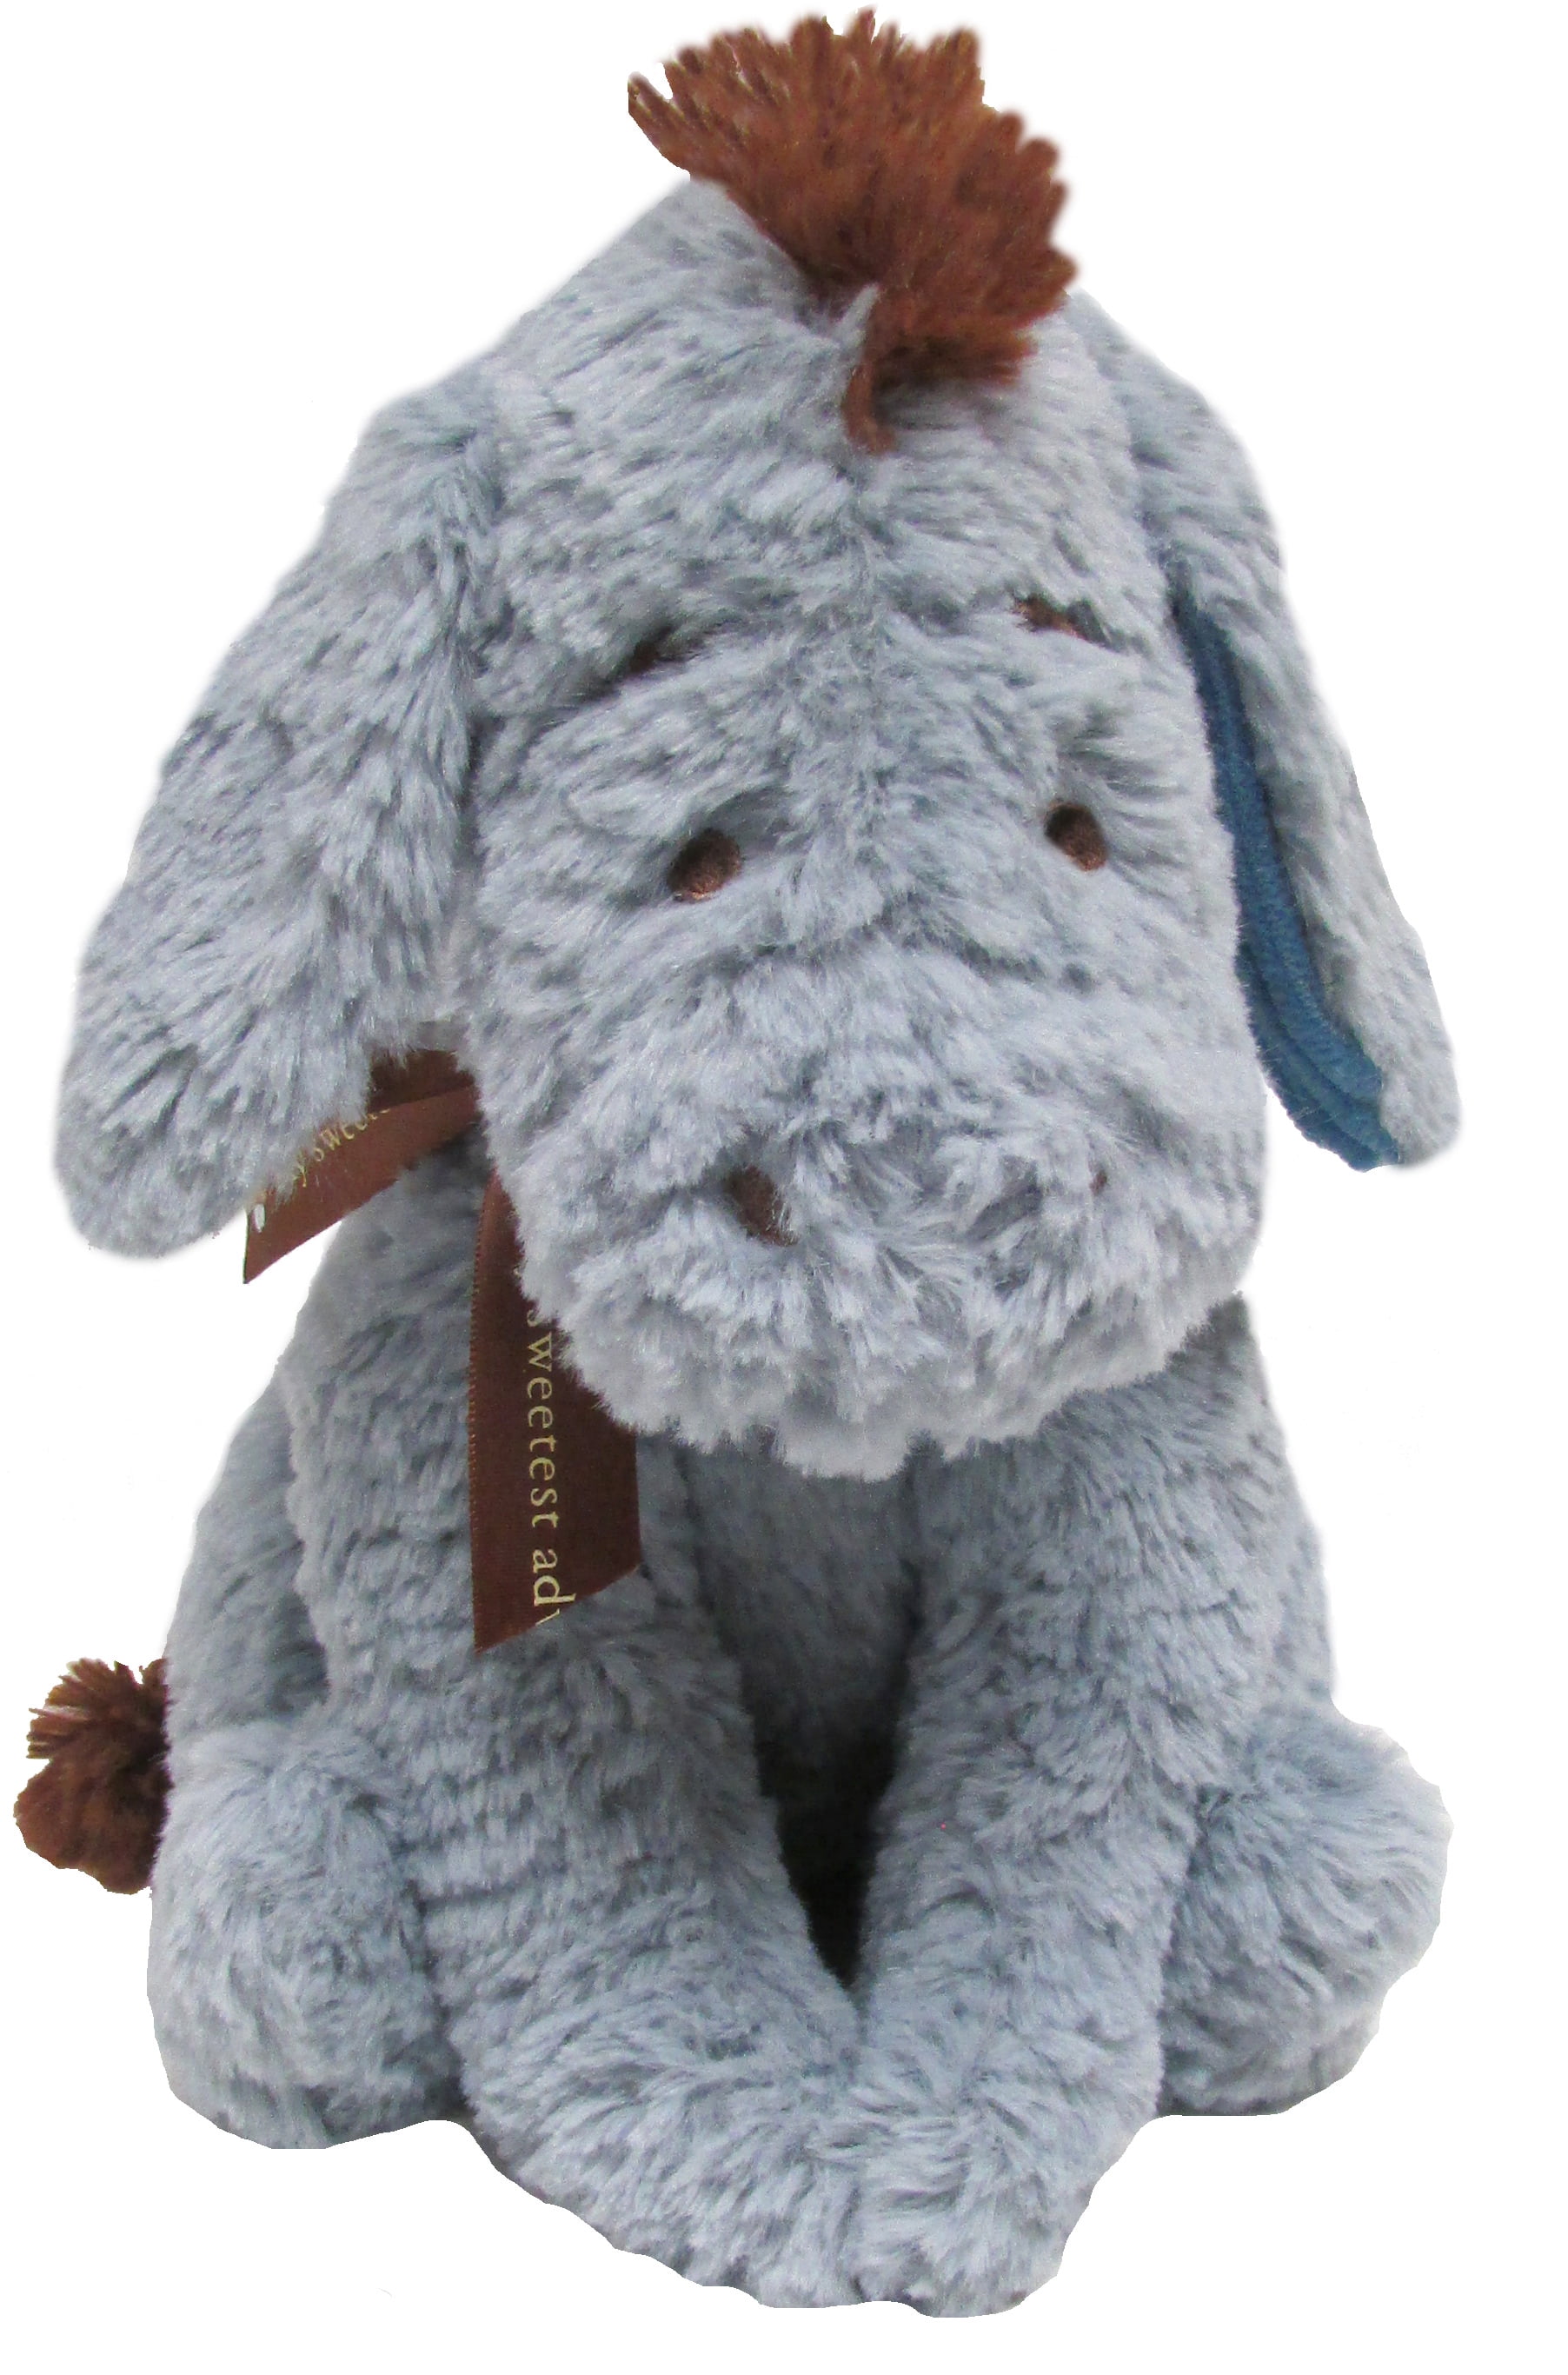 11 Disney Baby Dream International Plush Eeyore Stuffed Animal Winnie The Pooh for sale online 